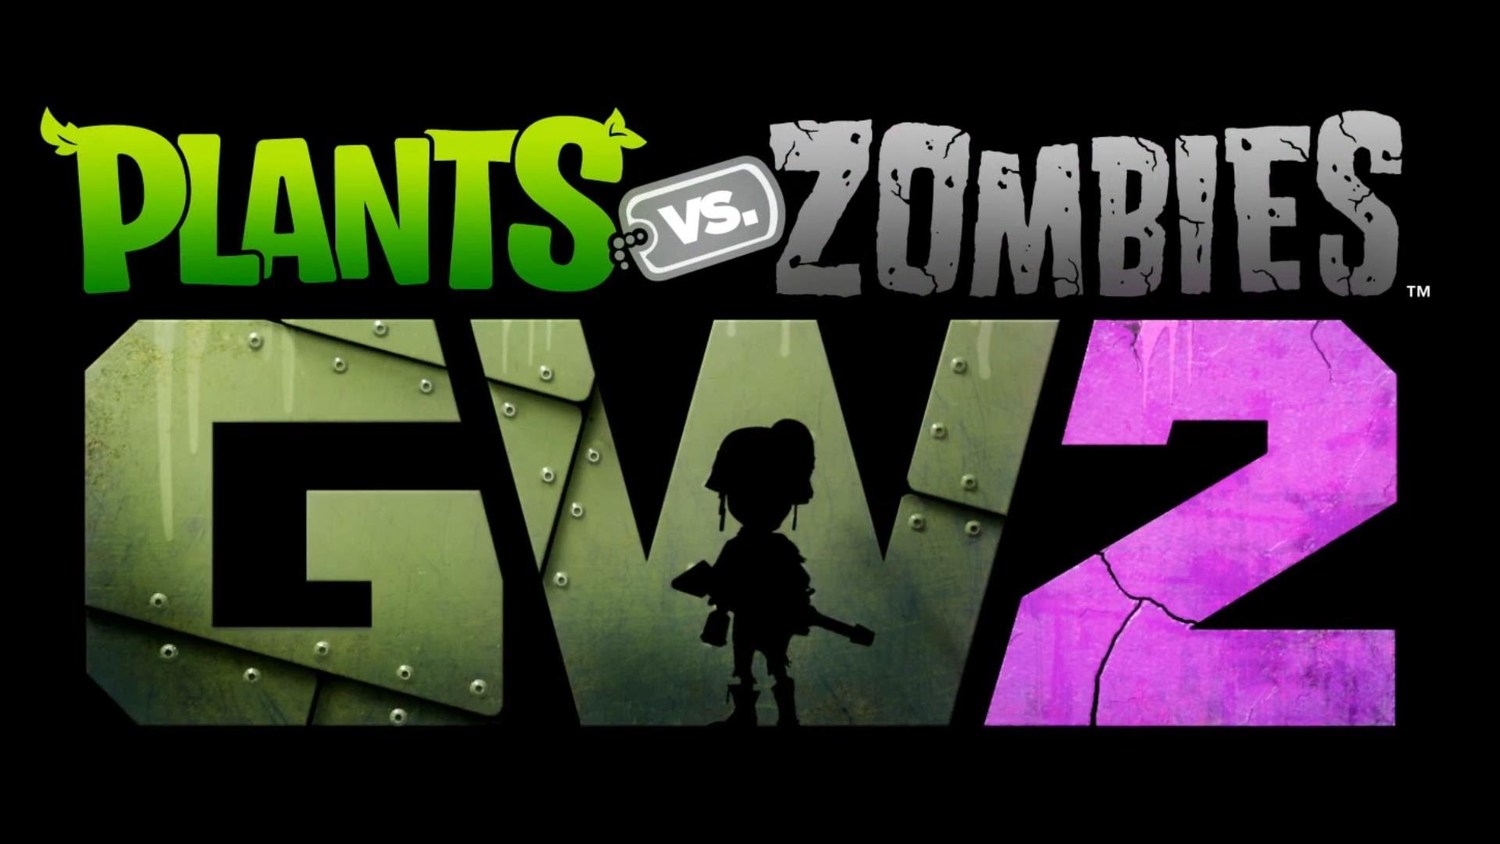 Plants vs Zombies Garden War 2 sfx